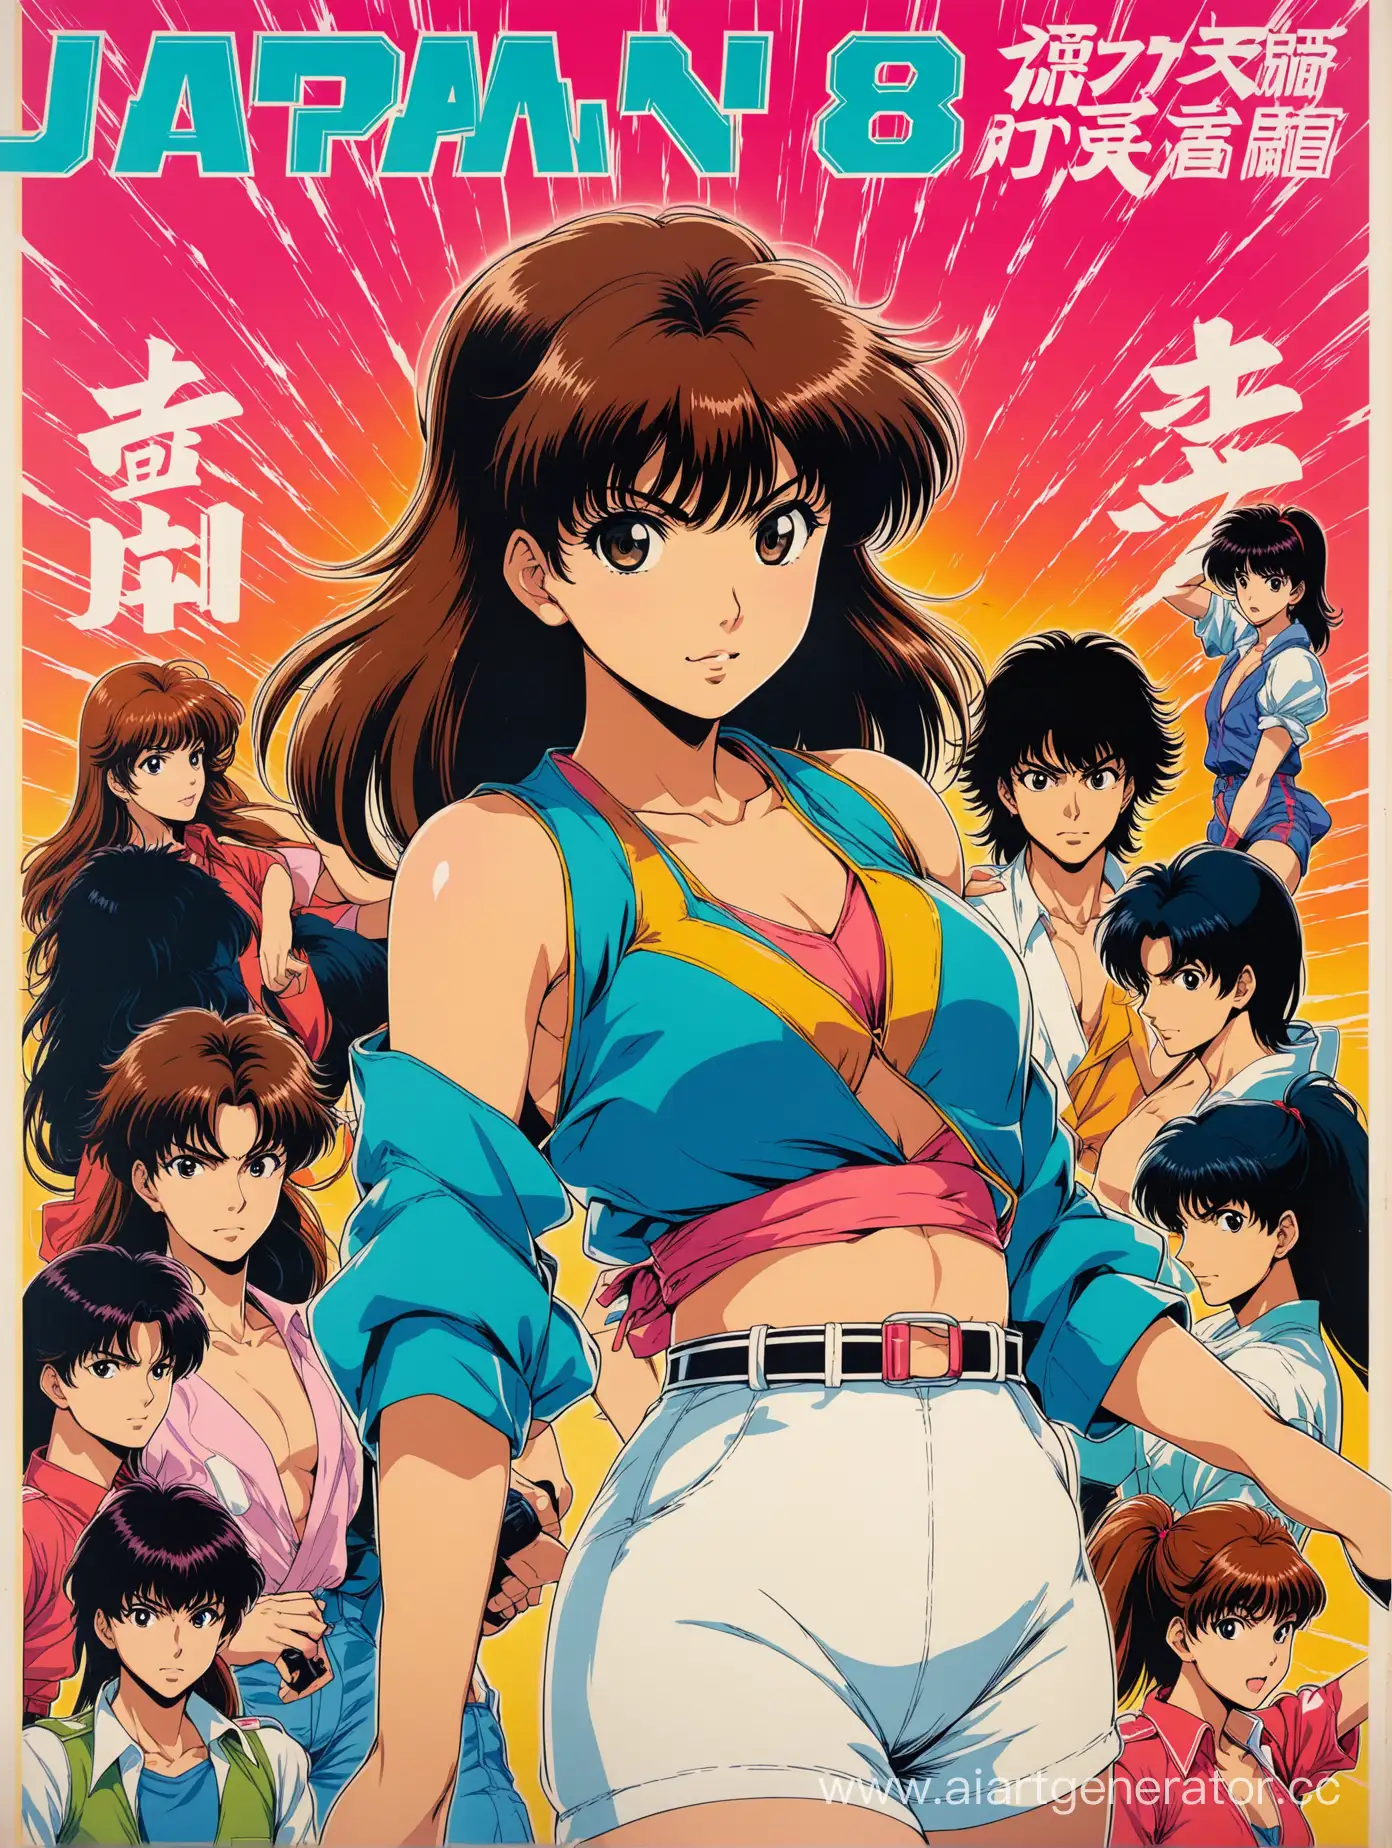 Retro-Japanese-Anime-Poster-Nostalgic-80s-Style-Art